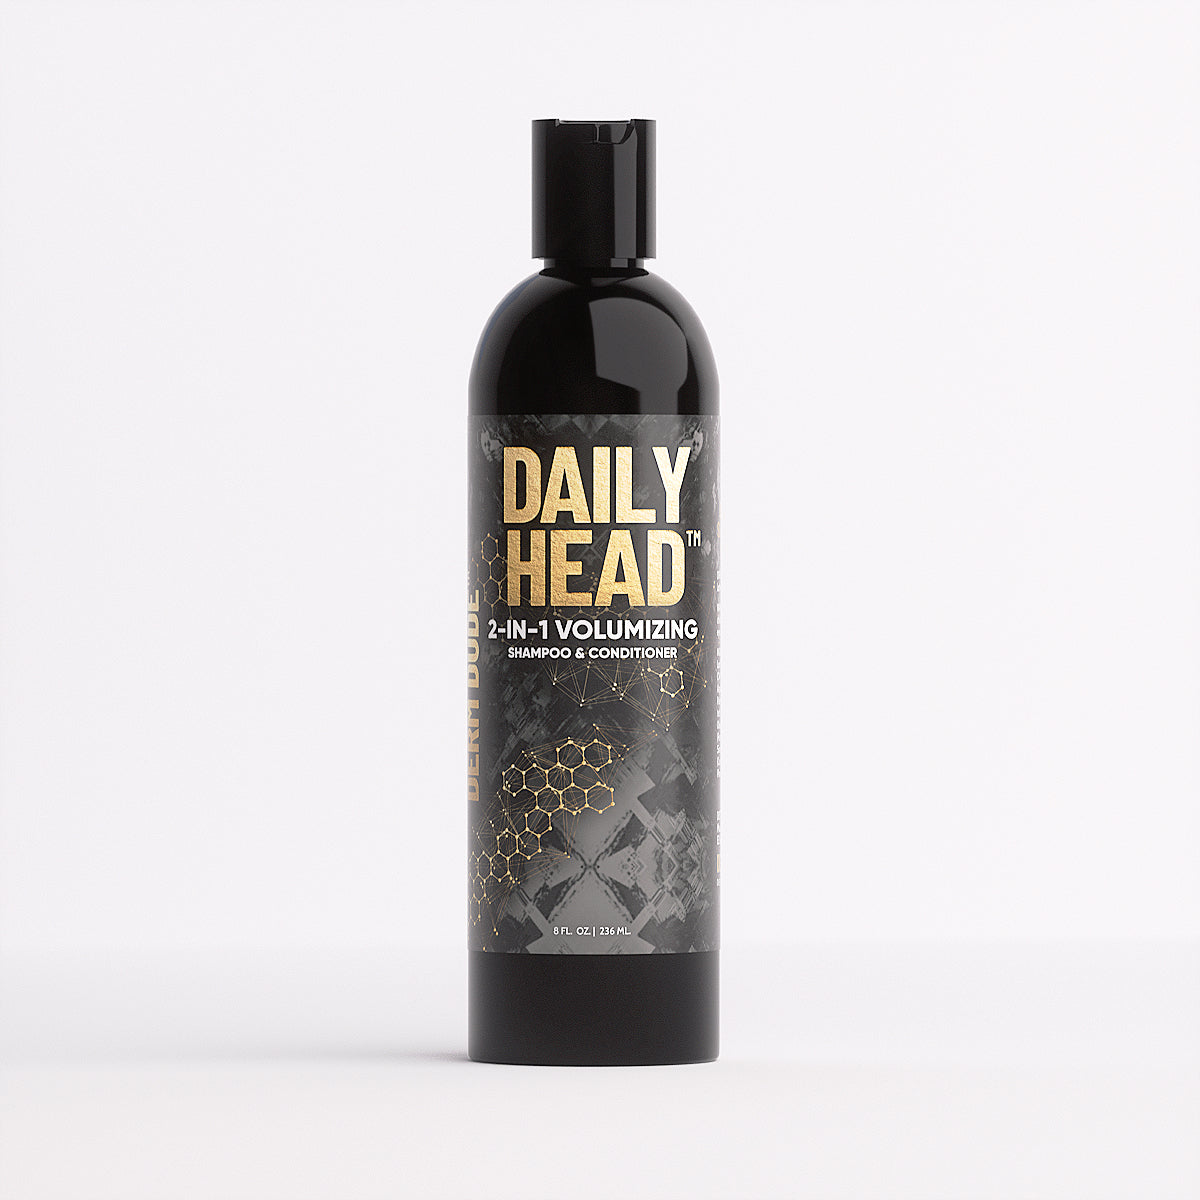 Daily Head™ 2-IN-1 Volumizing Shampoo Derm Dude